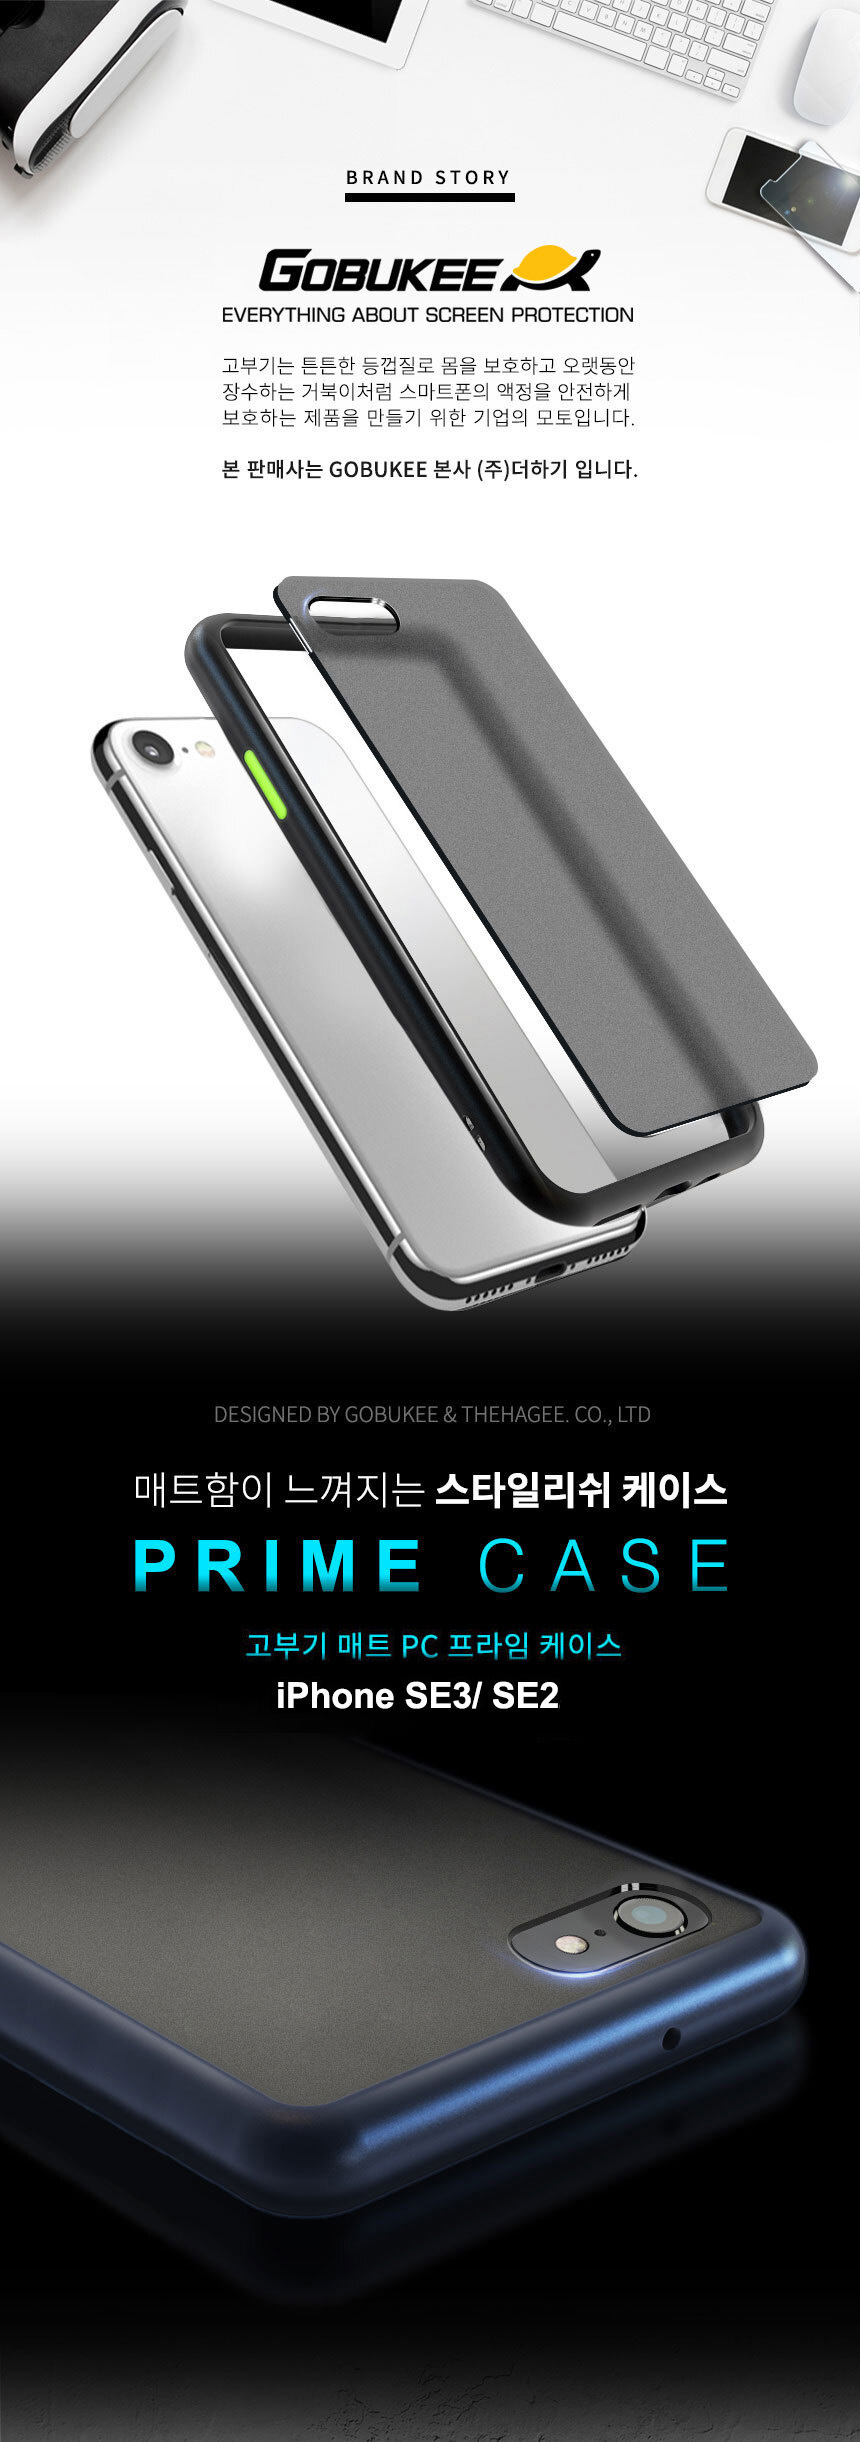 iPhonbe-SE_Matt-PC-case_page_01.jpg